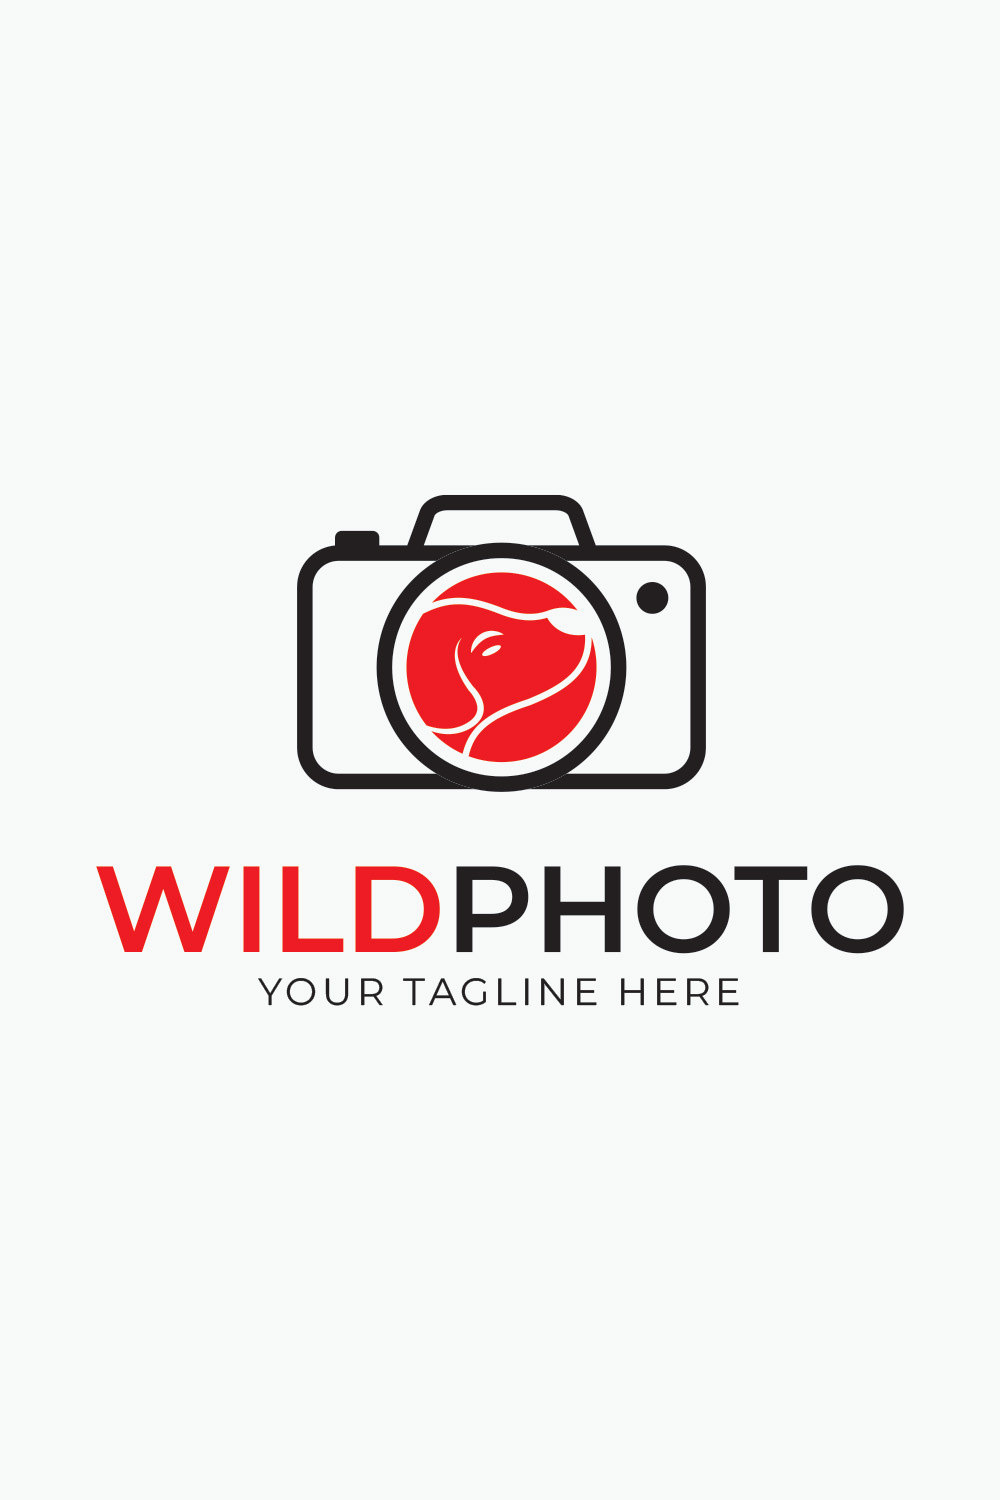 WildPhoto Logo Template Pinterest image.